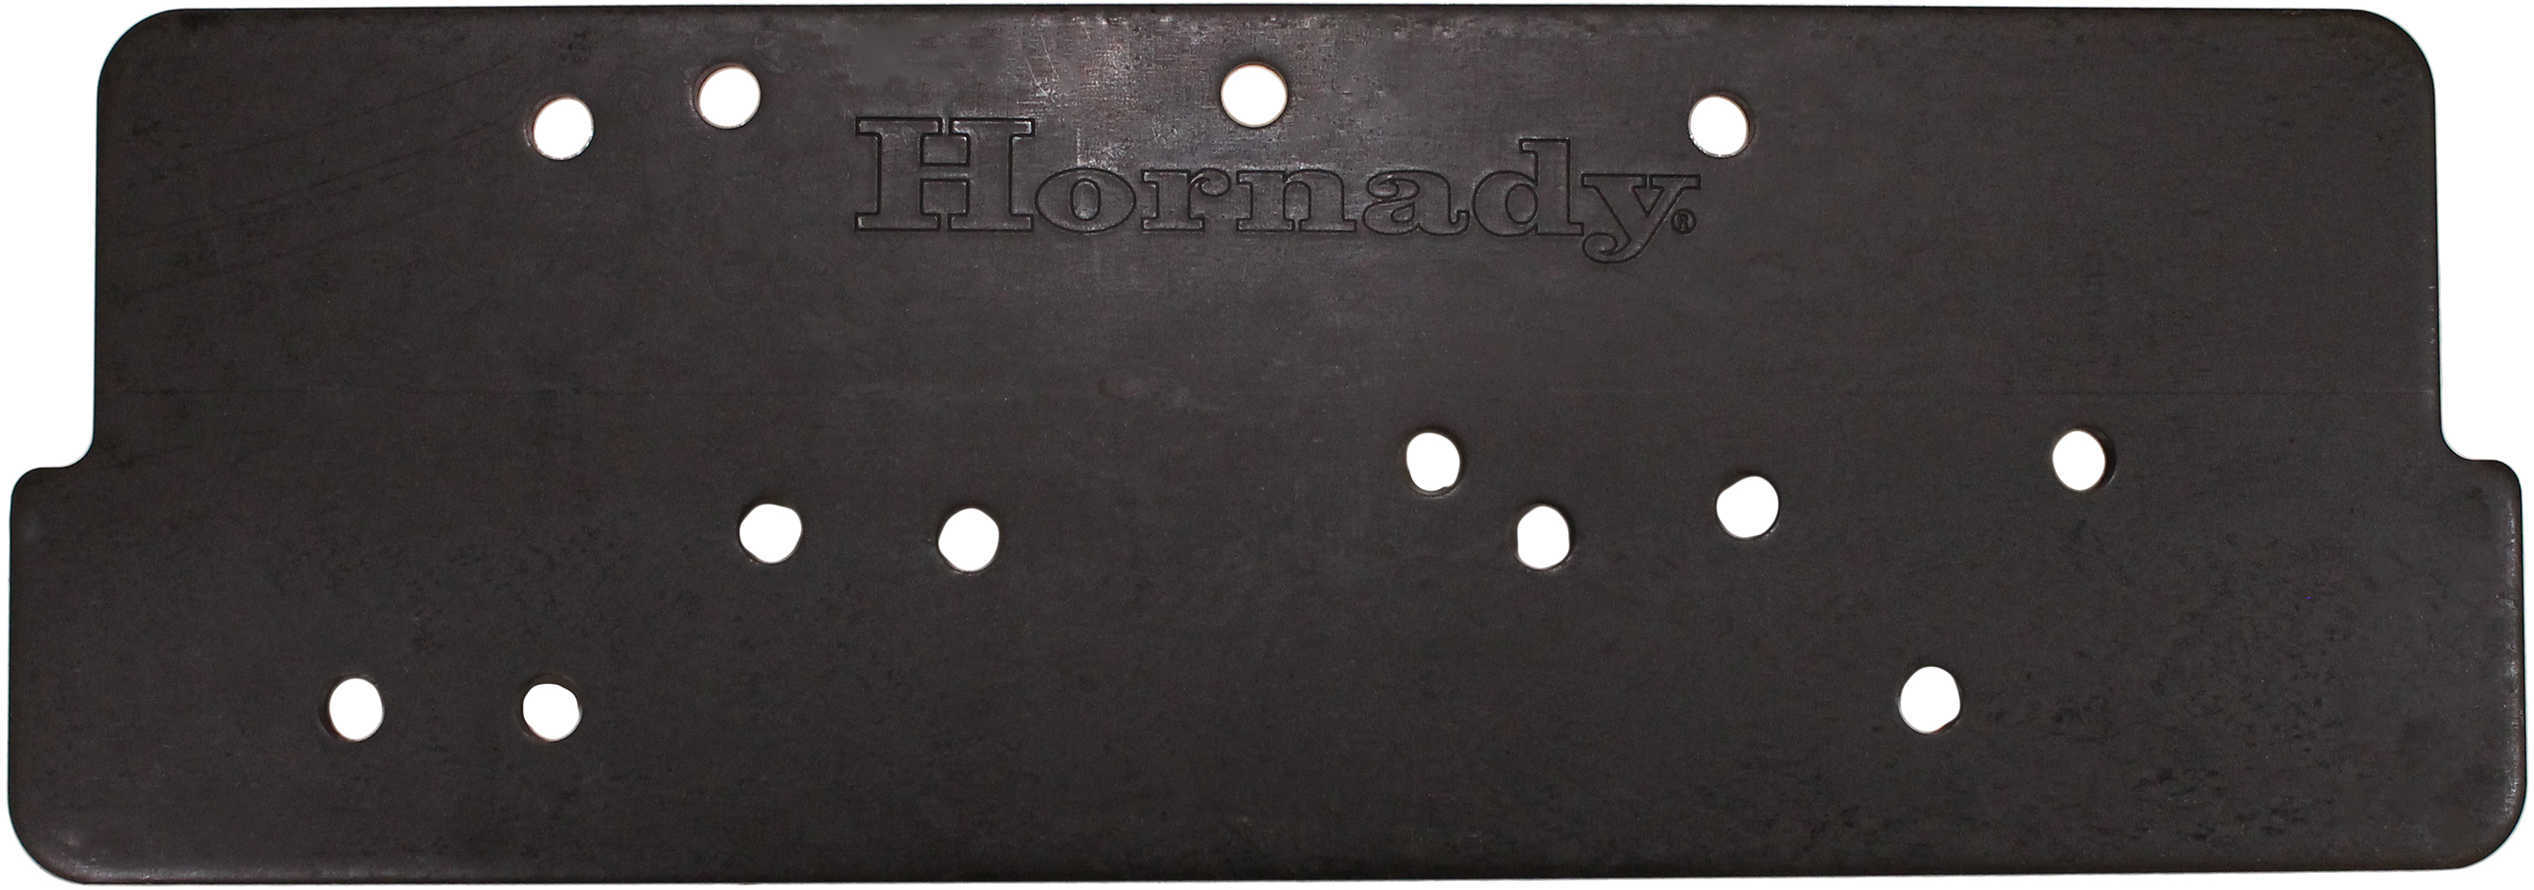 Hornady Quick Detach Universal Mounting Plate